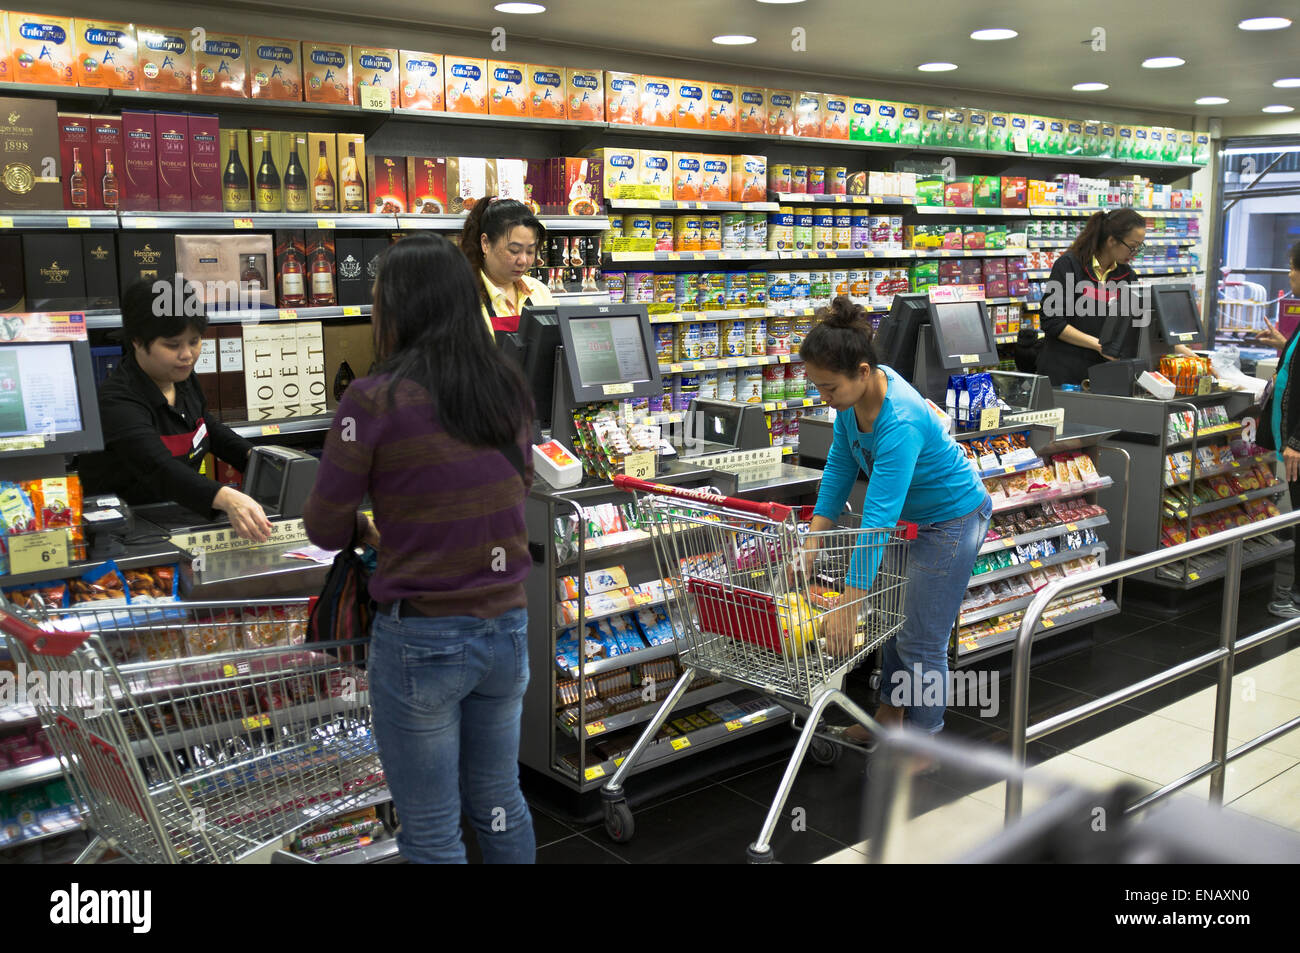 dh Wellcome CAUSEWAY BAY HONGKONG Chinesische Kunden Supermarkt Kasse china Supermarkt Stockfoto